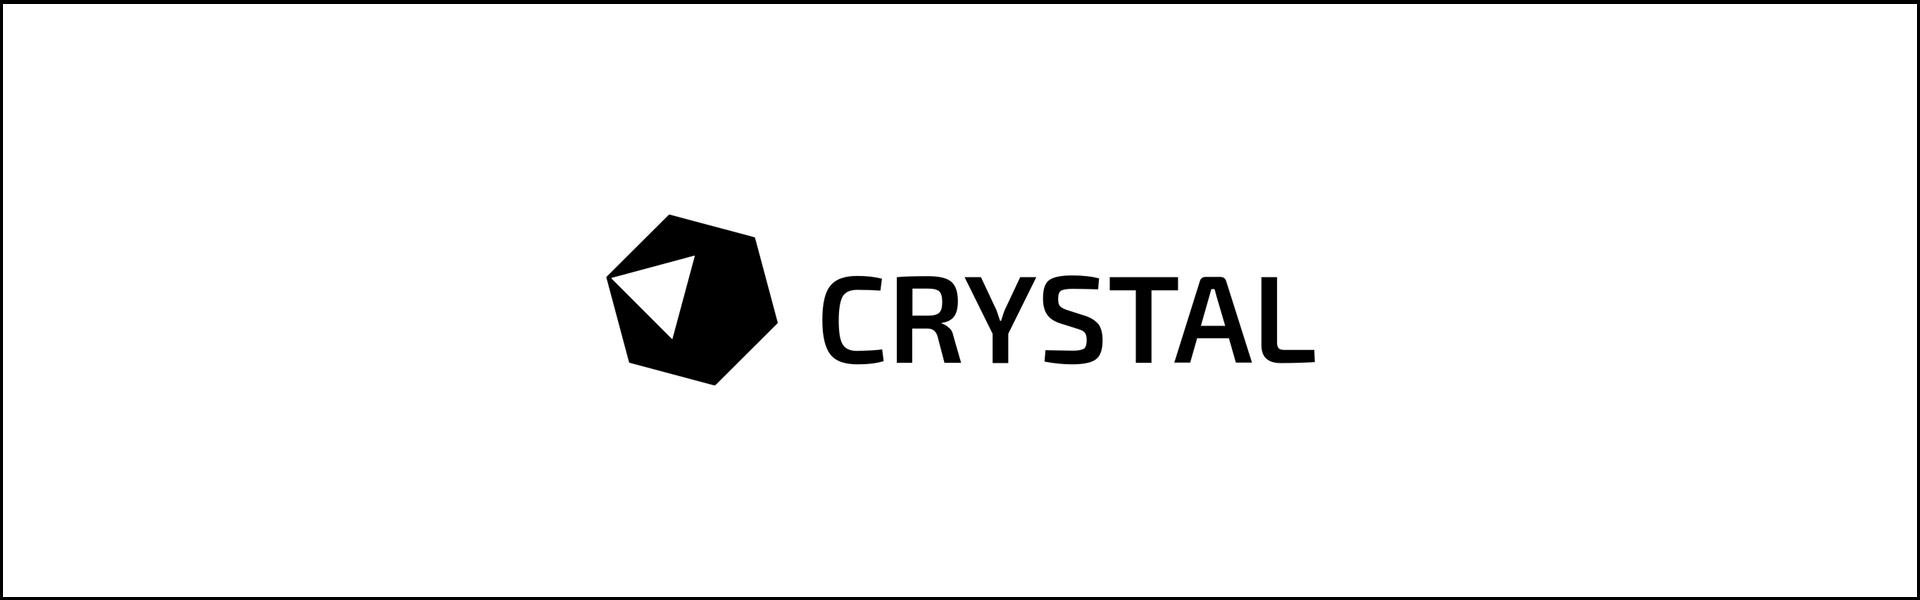 The Crystal language logo